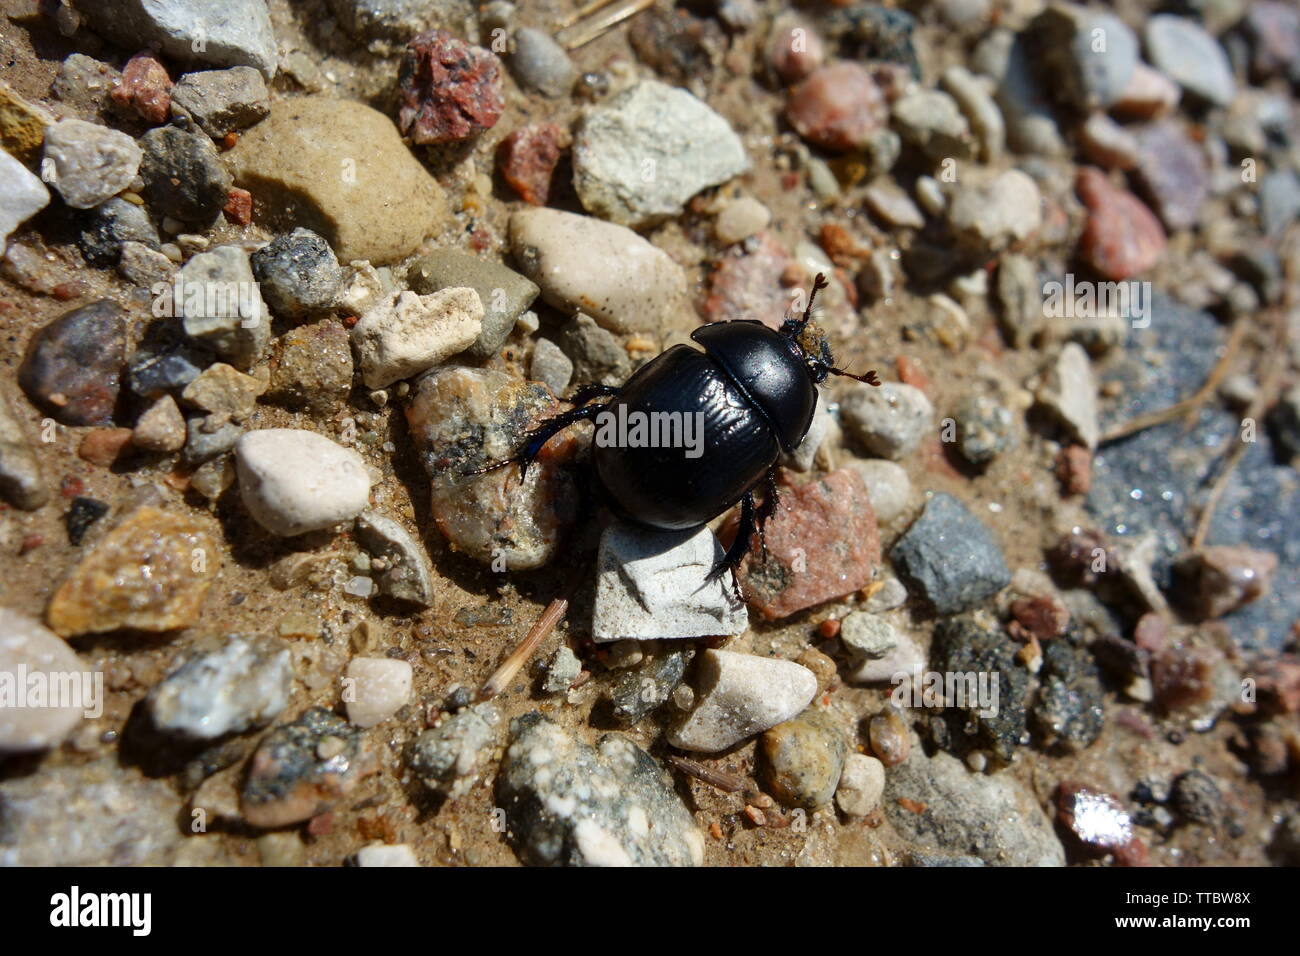 Dor beetle on the gravel path, closeup Stock Photo